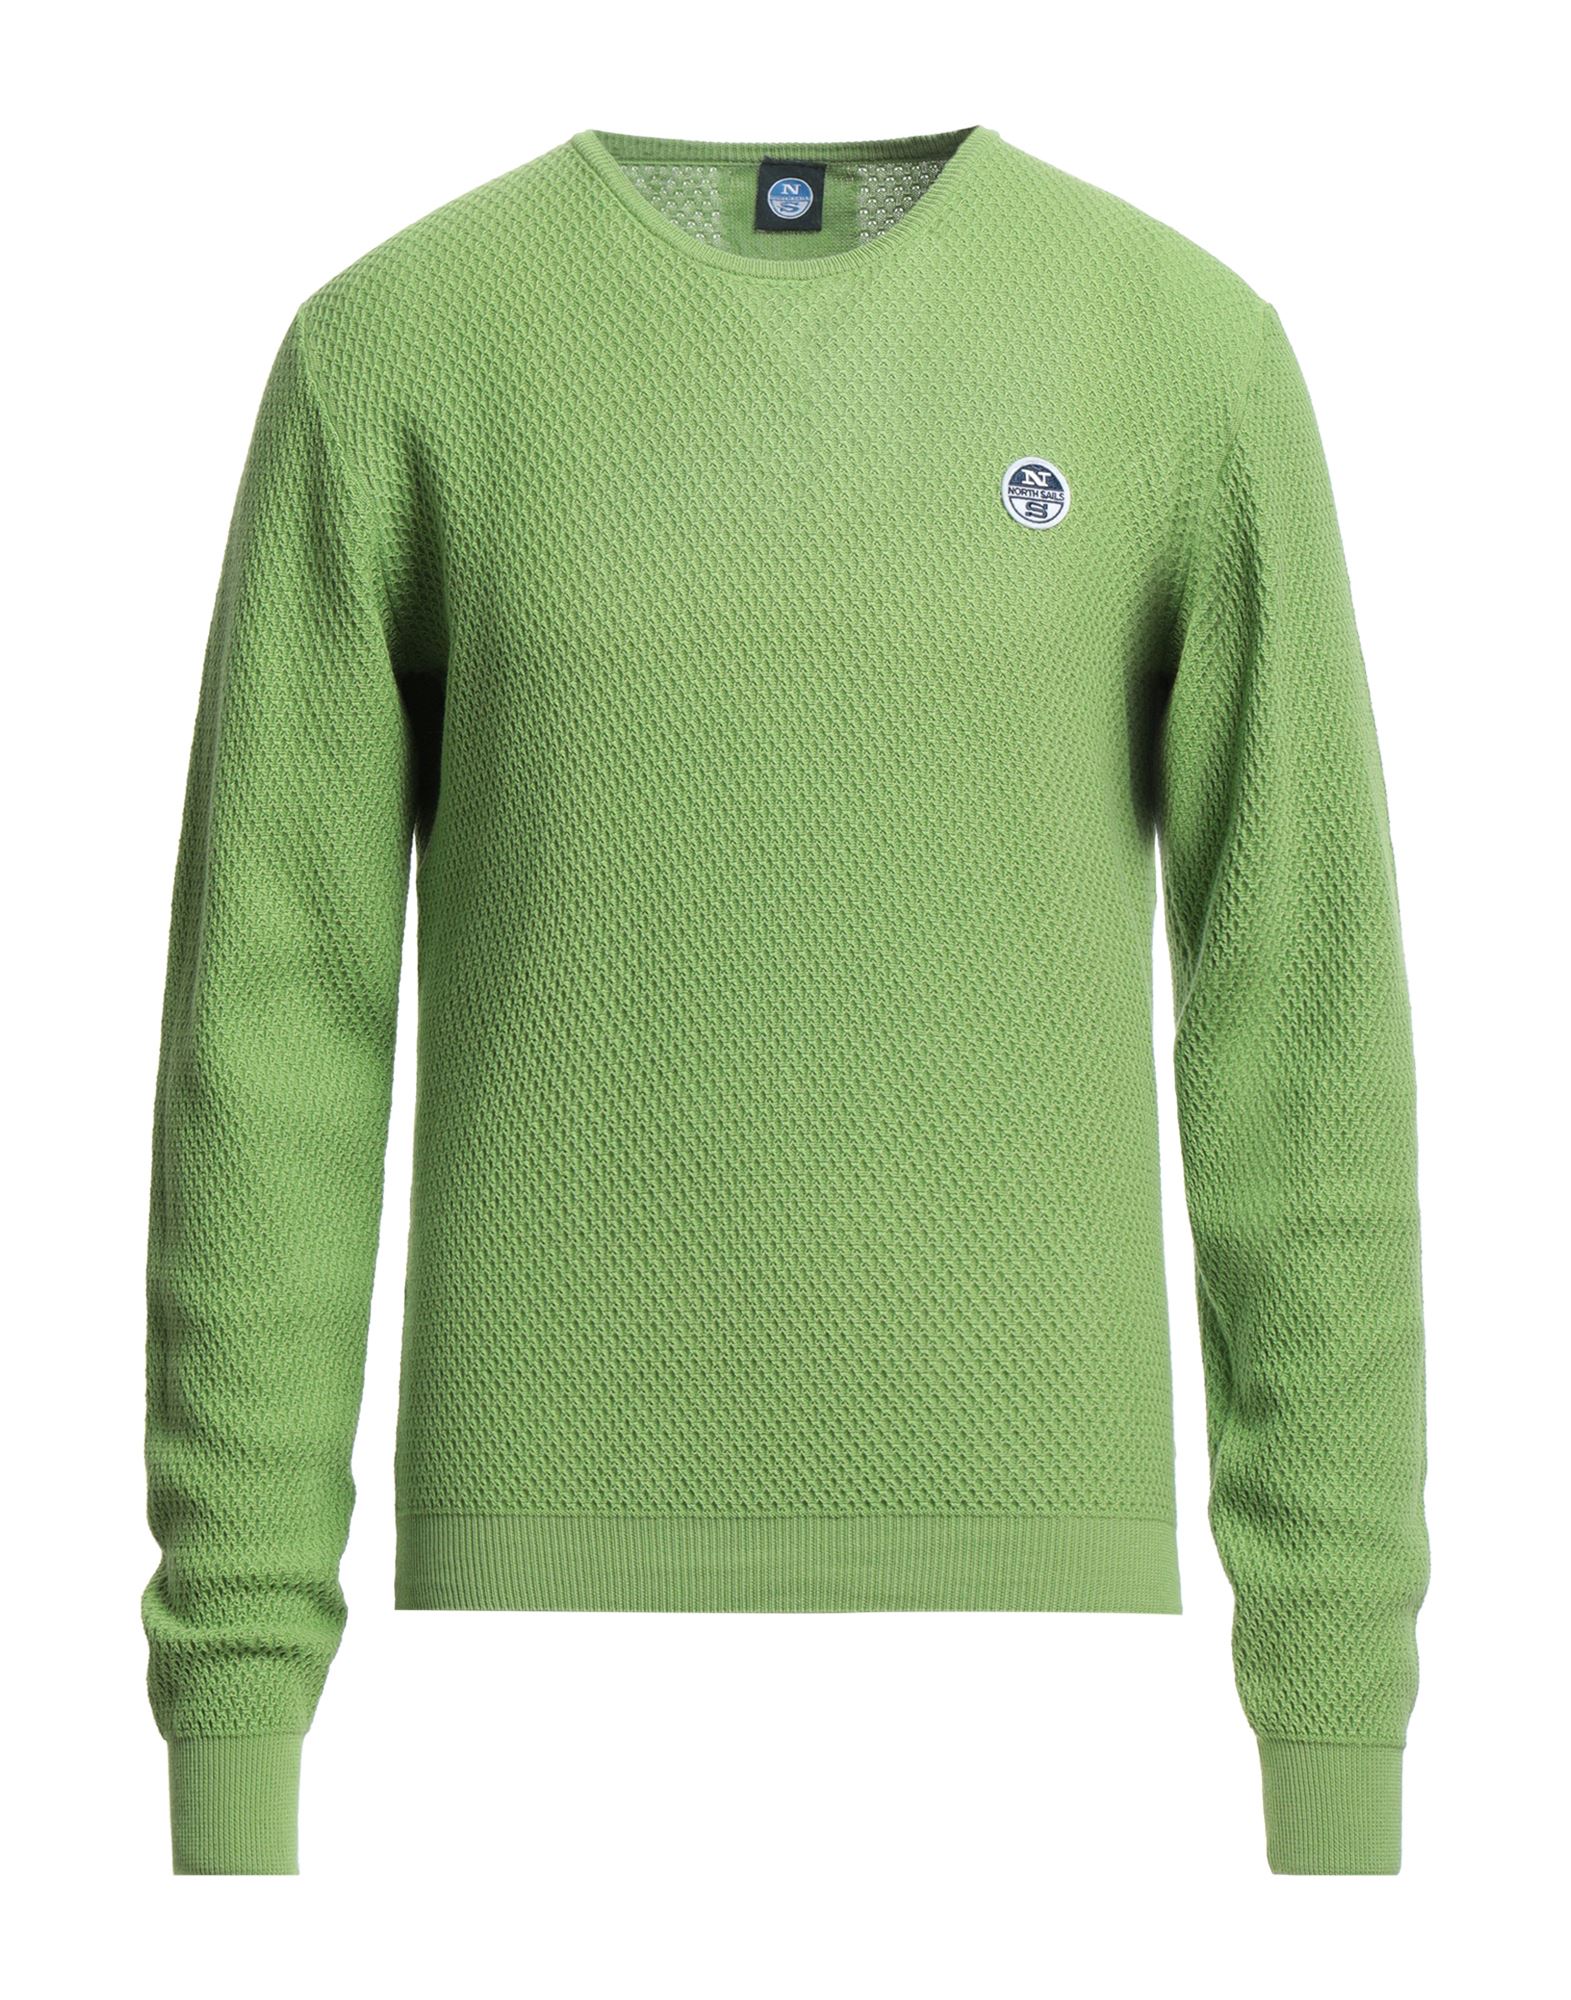 North Sails Mens Green Sweater